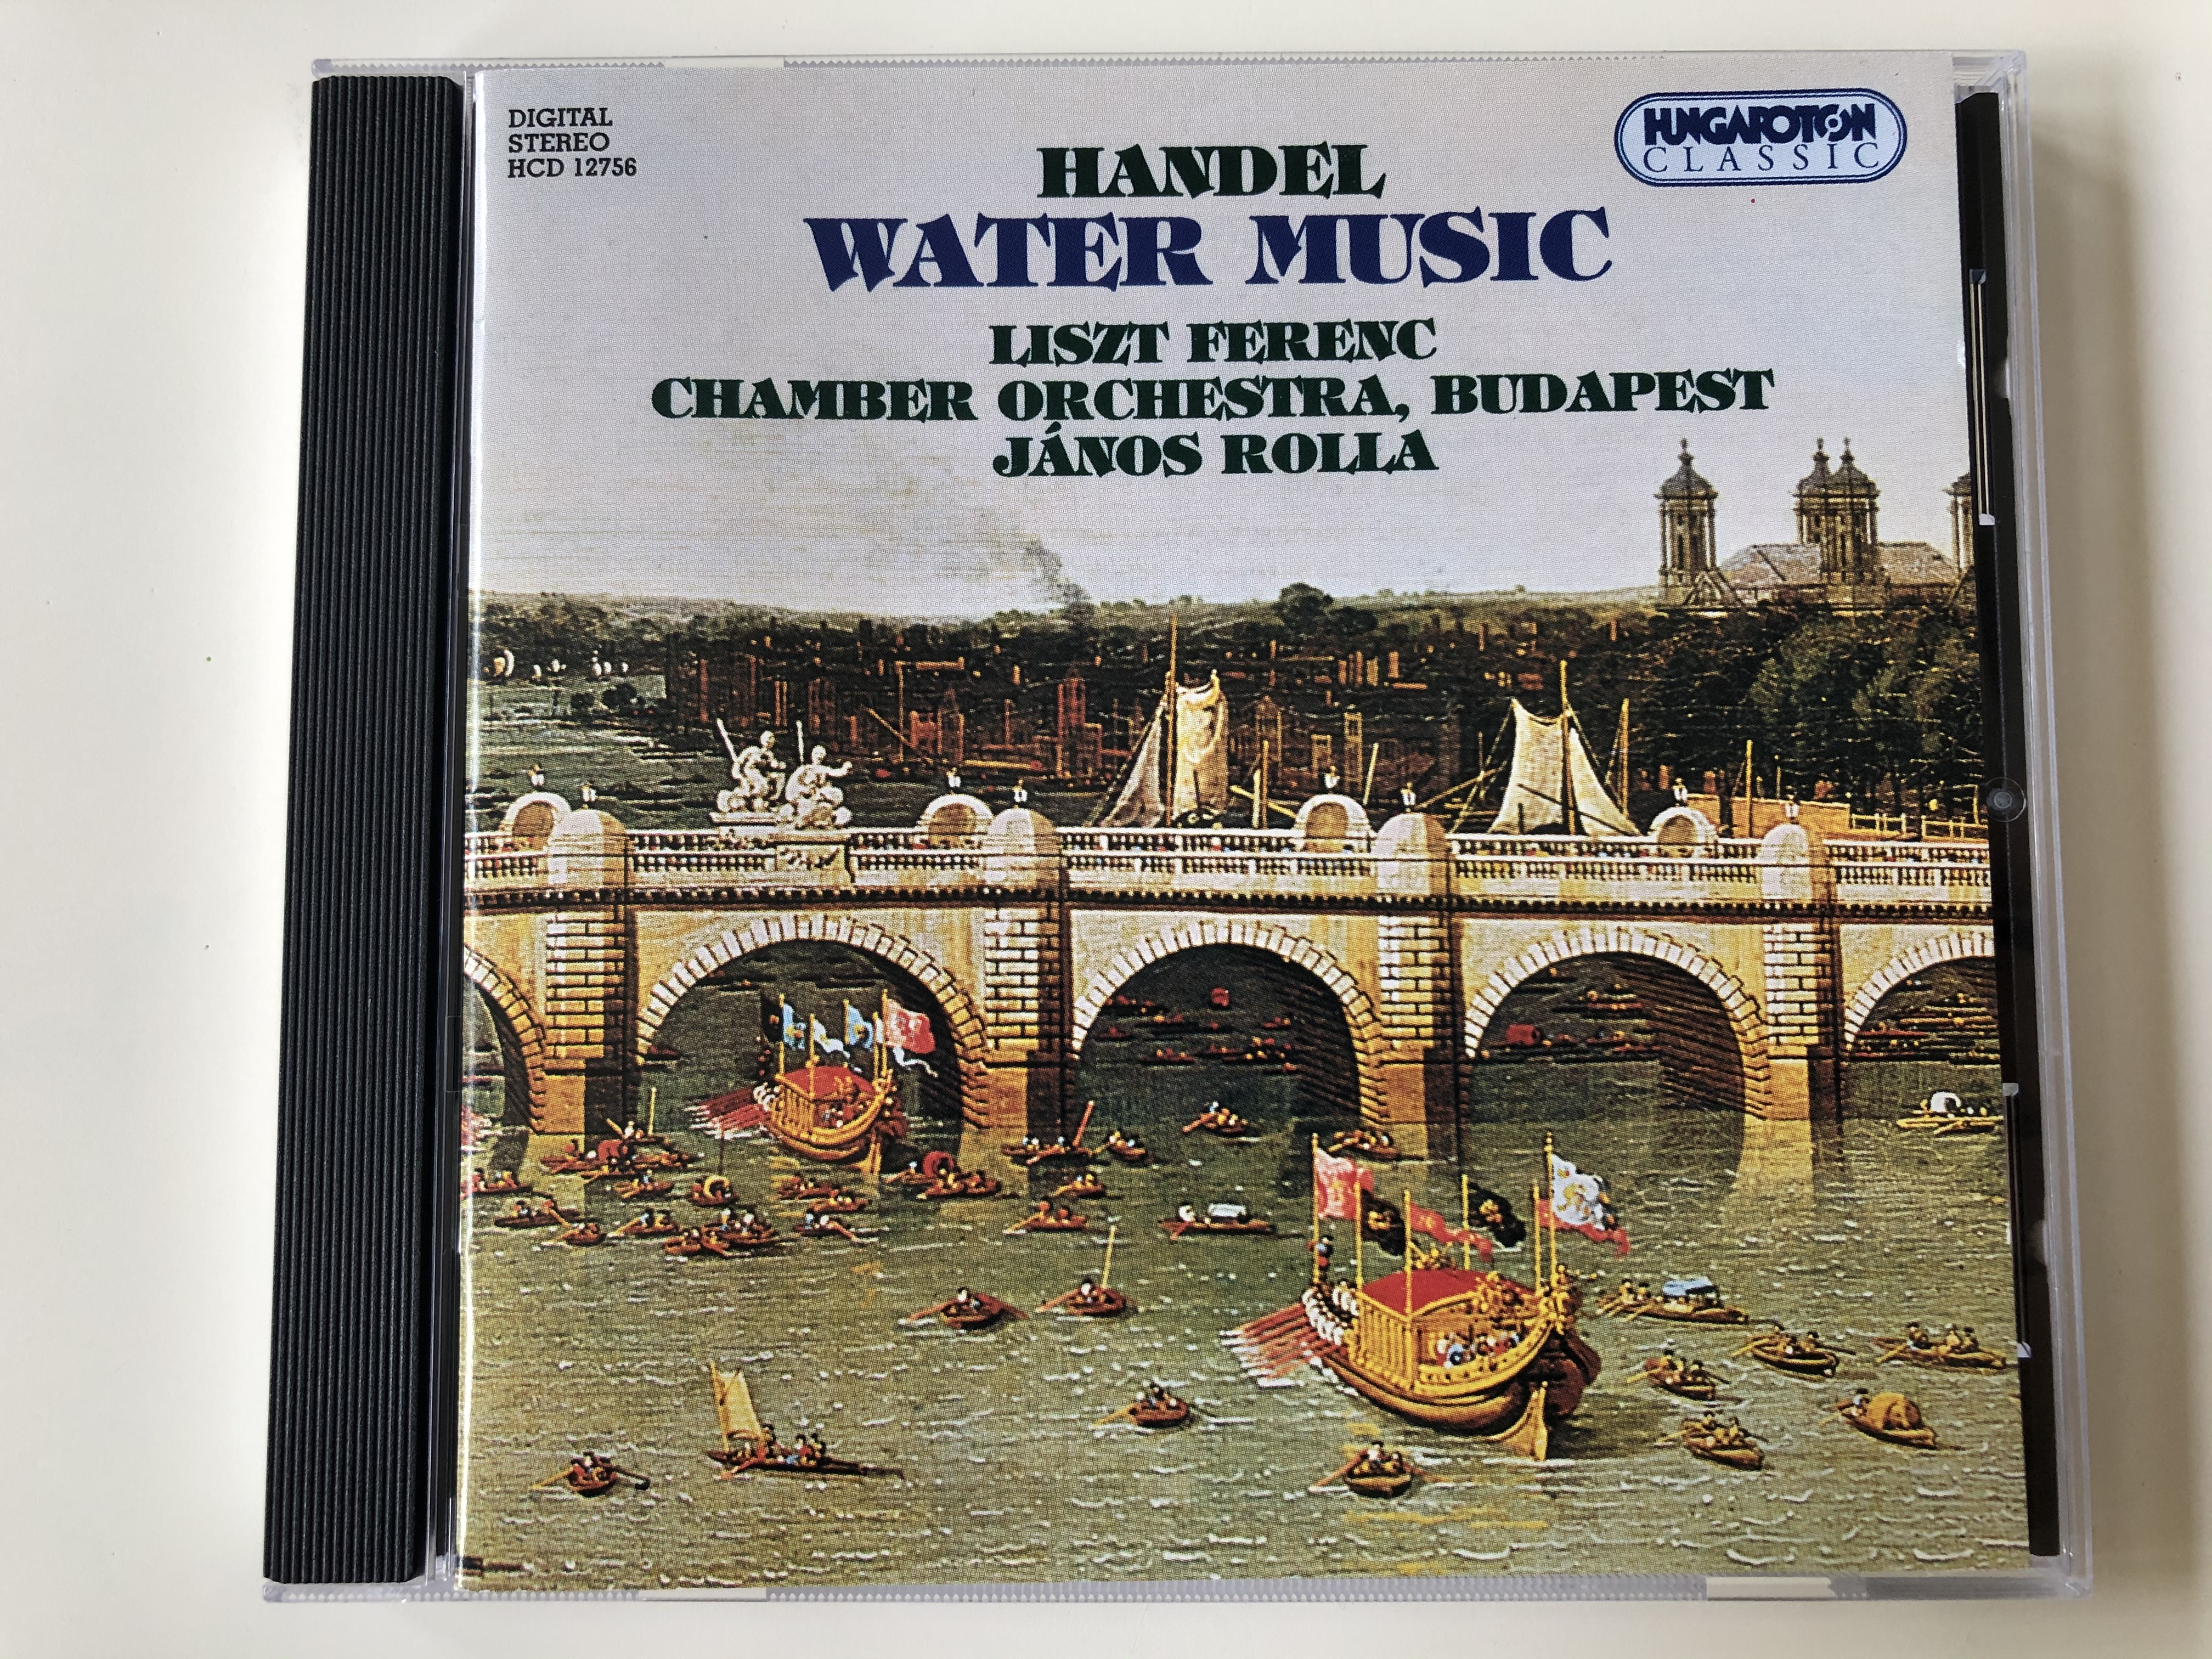 handel-water-music-liszt-ferenc-chamber-orchestra-budapest-j-nos-rolla-hungaroton-classic-audio-cd-1994-stereo-hcd-12756-1-.jpg